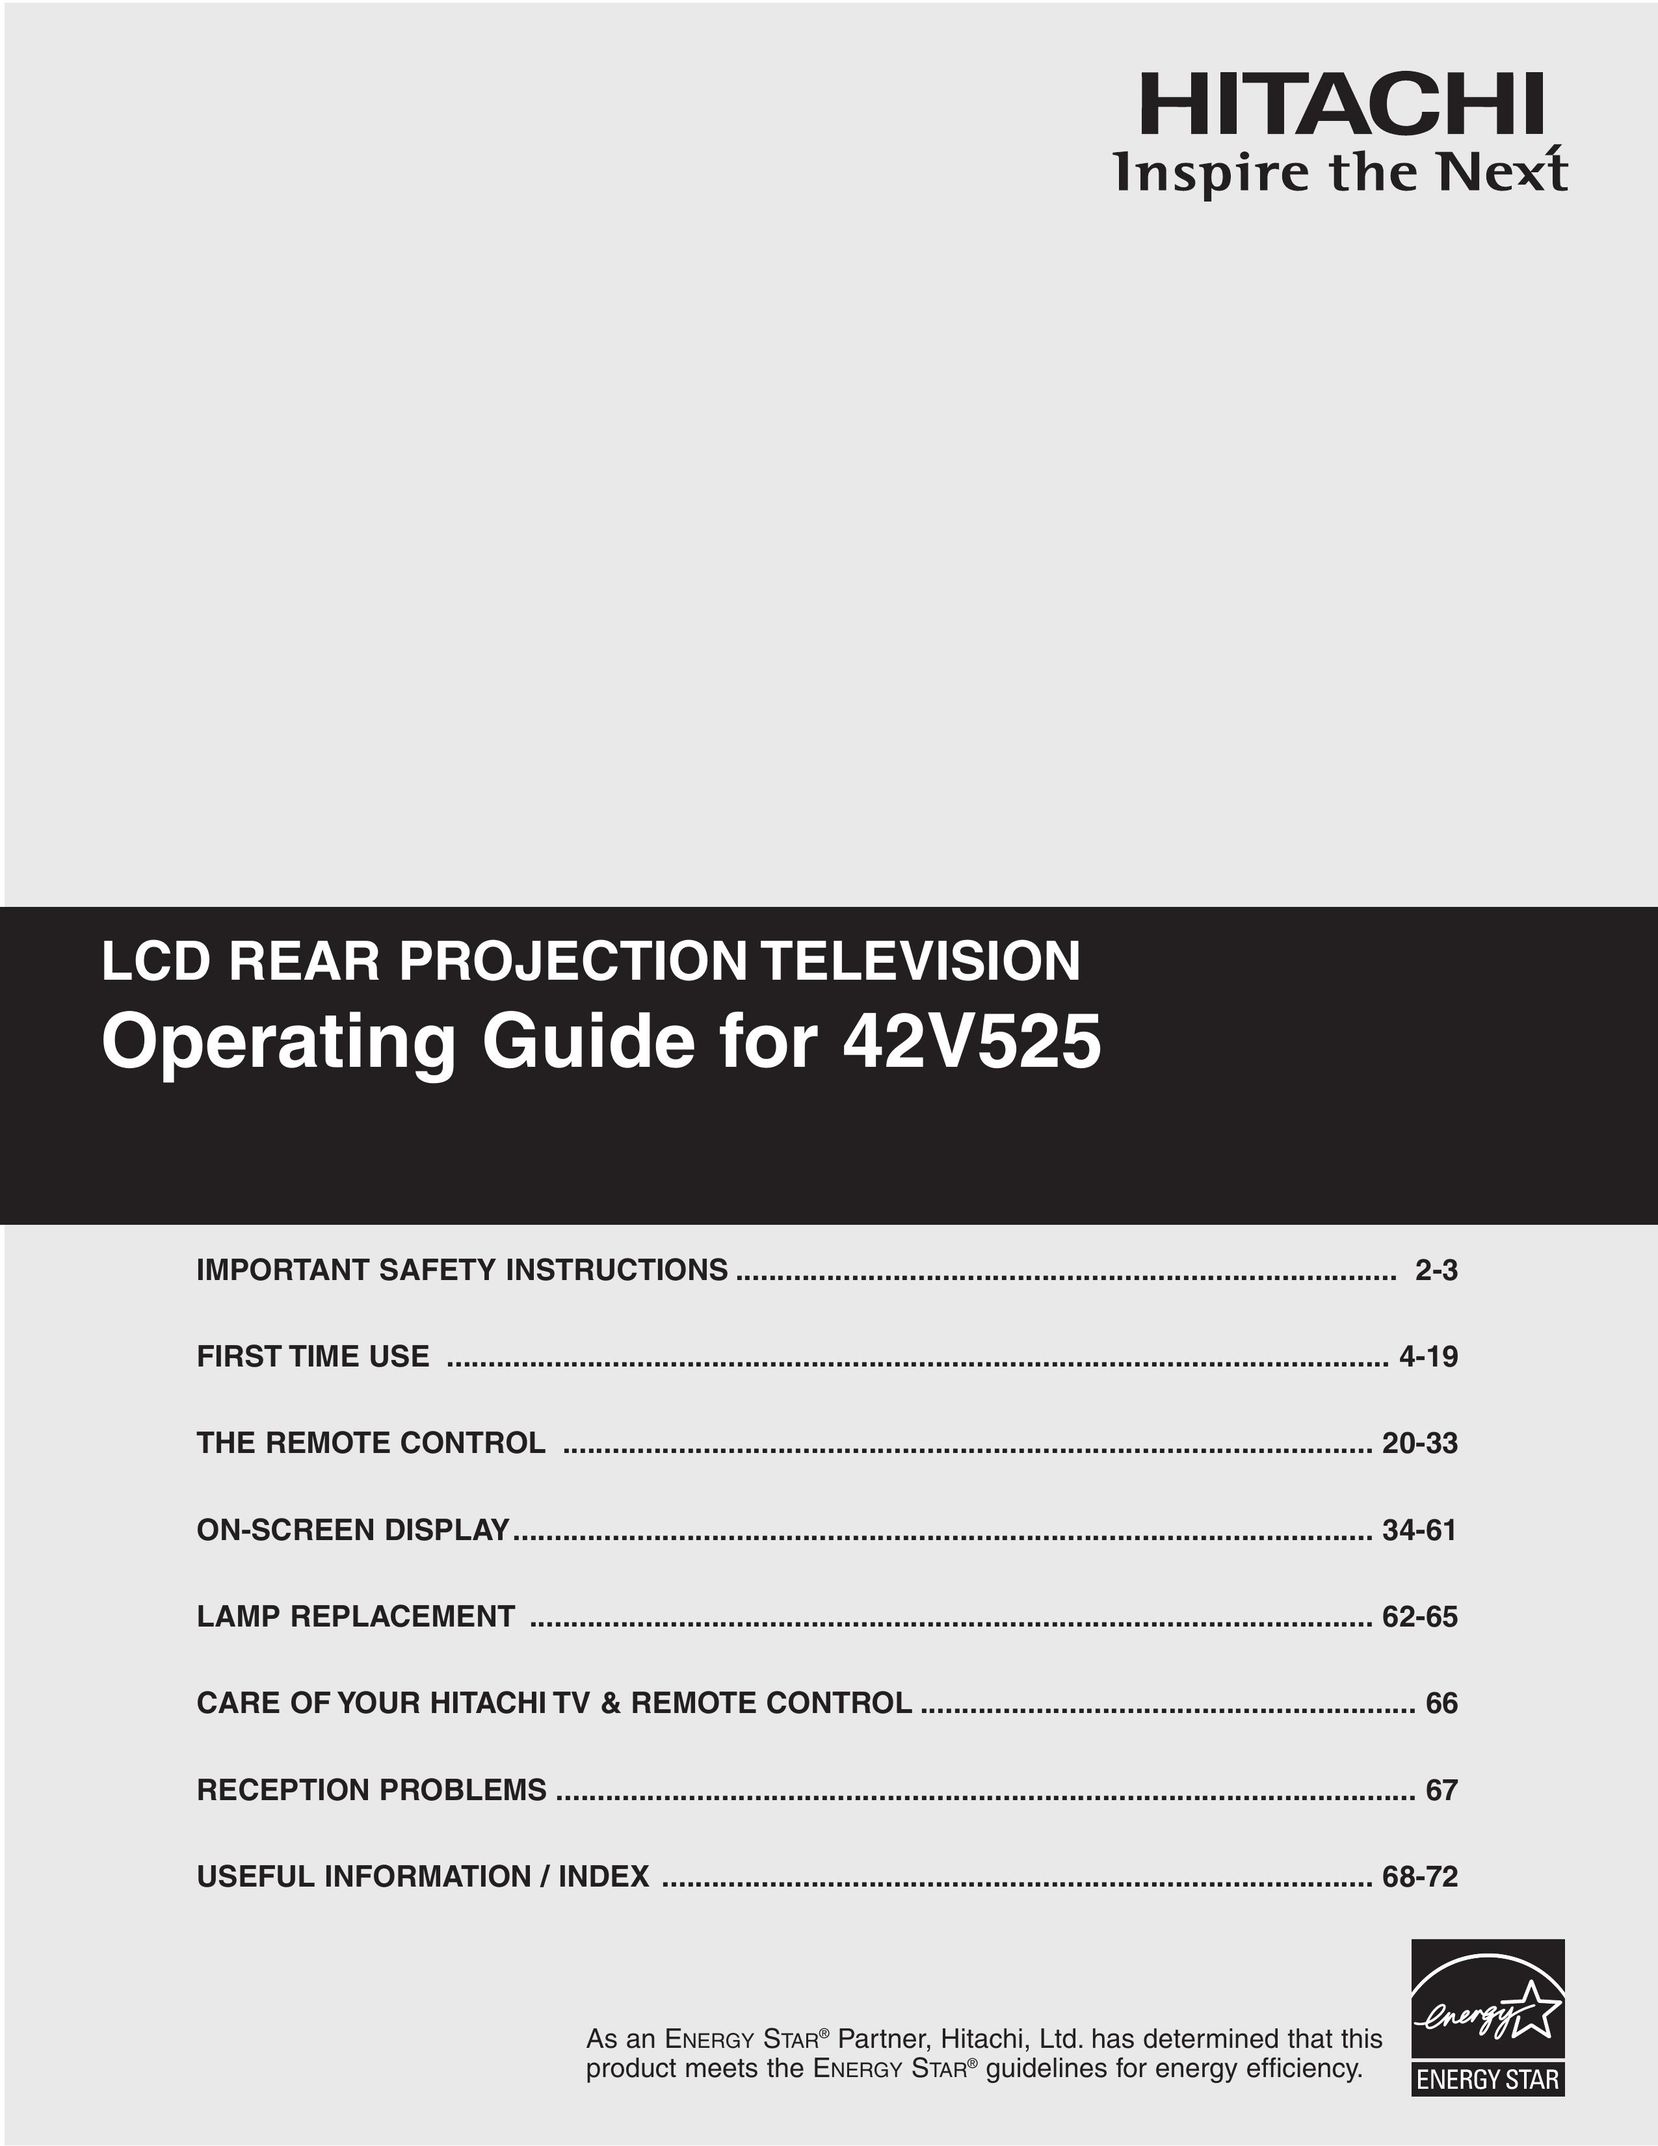 Hitachi 42V525 Projection Television User Manual